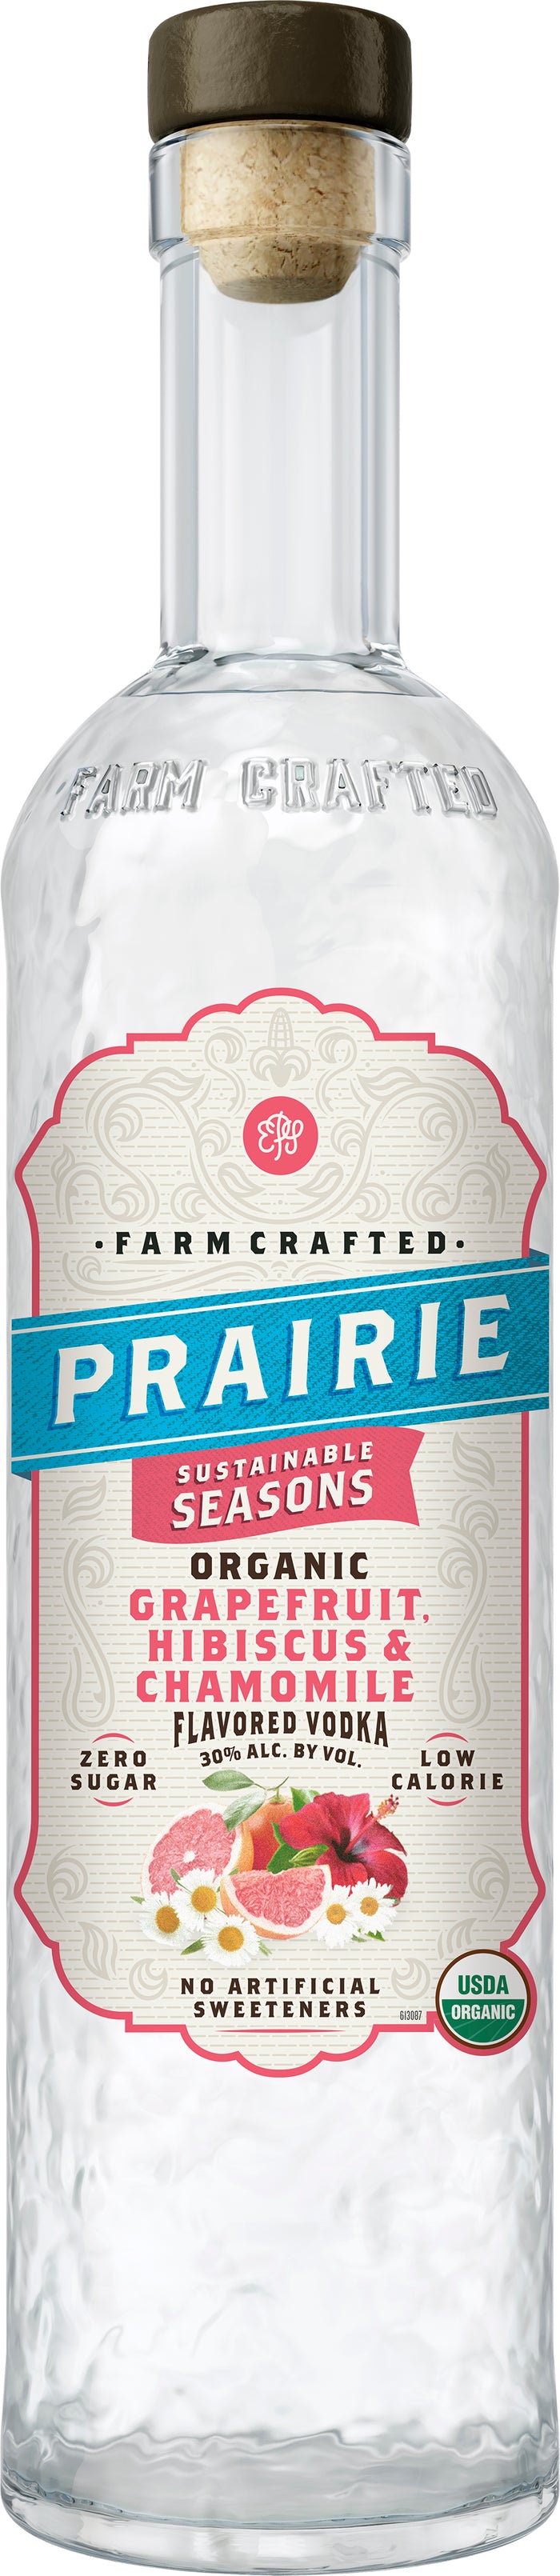 Prairie Organic Sustainable Grapefruit Hibiscus & Chamomile Vodka